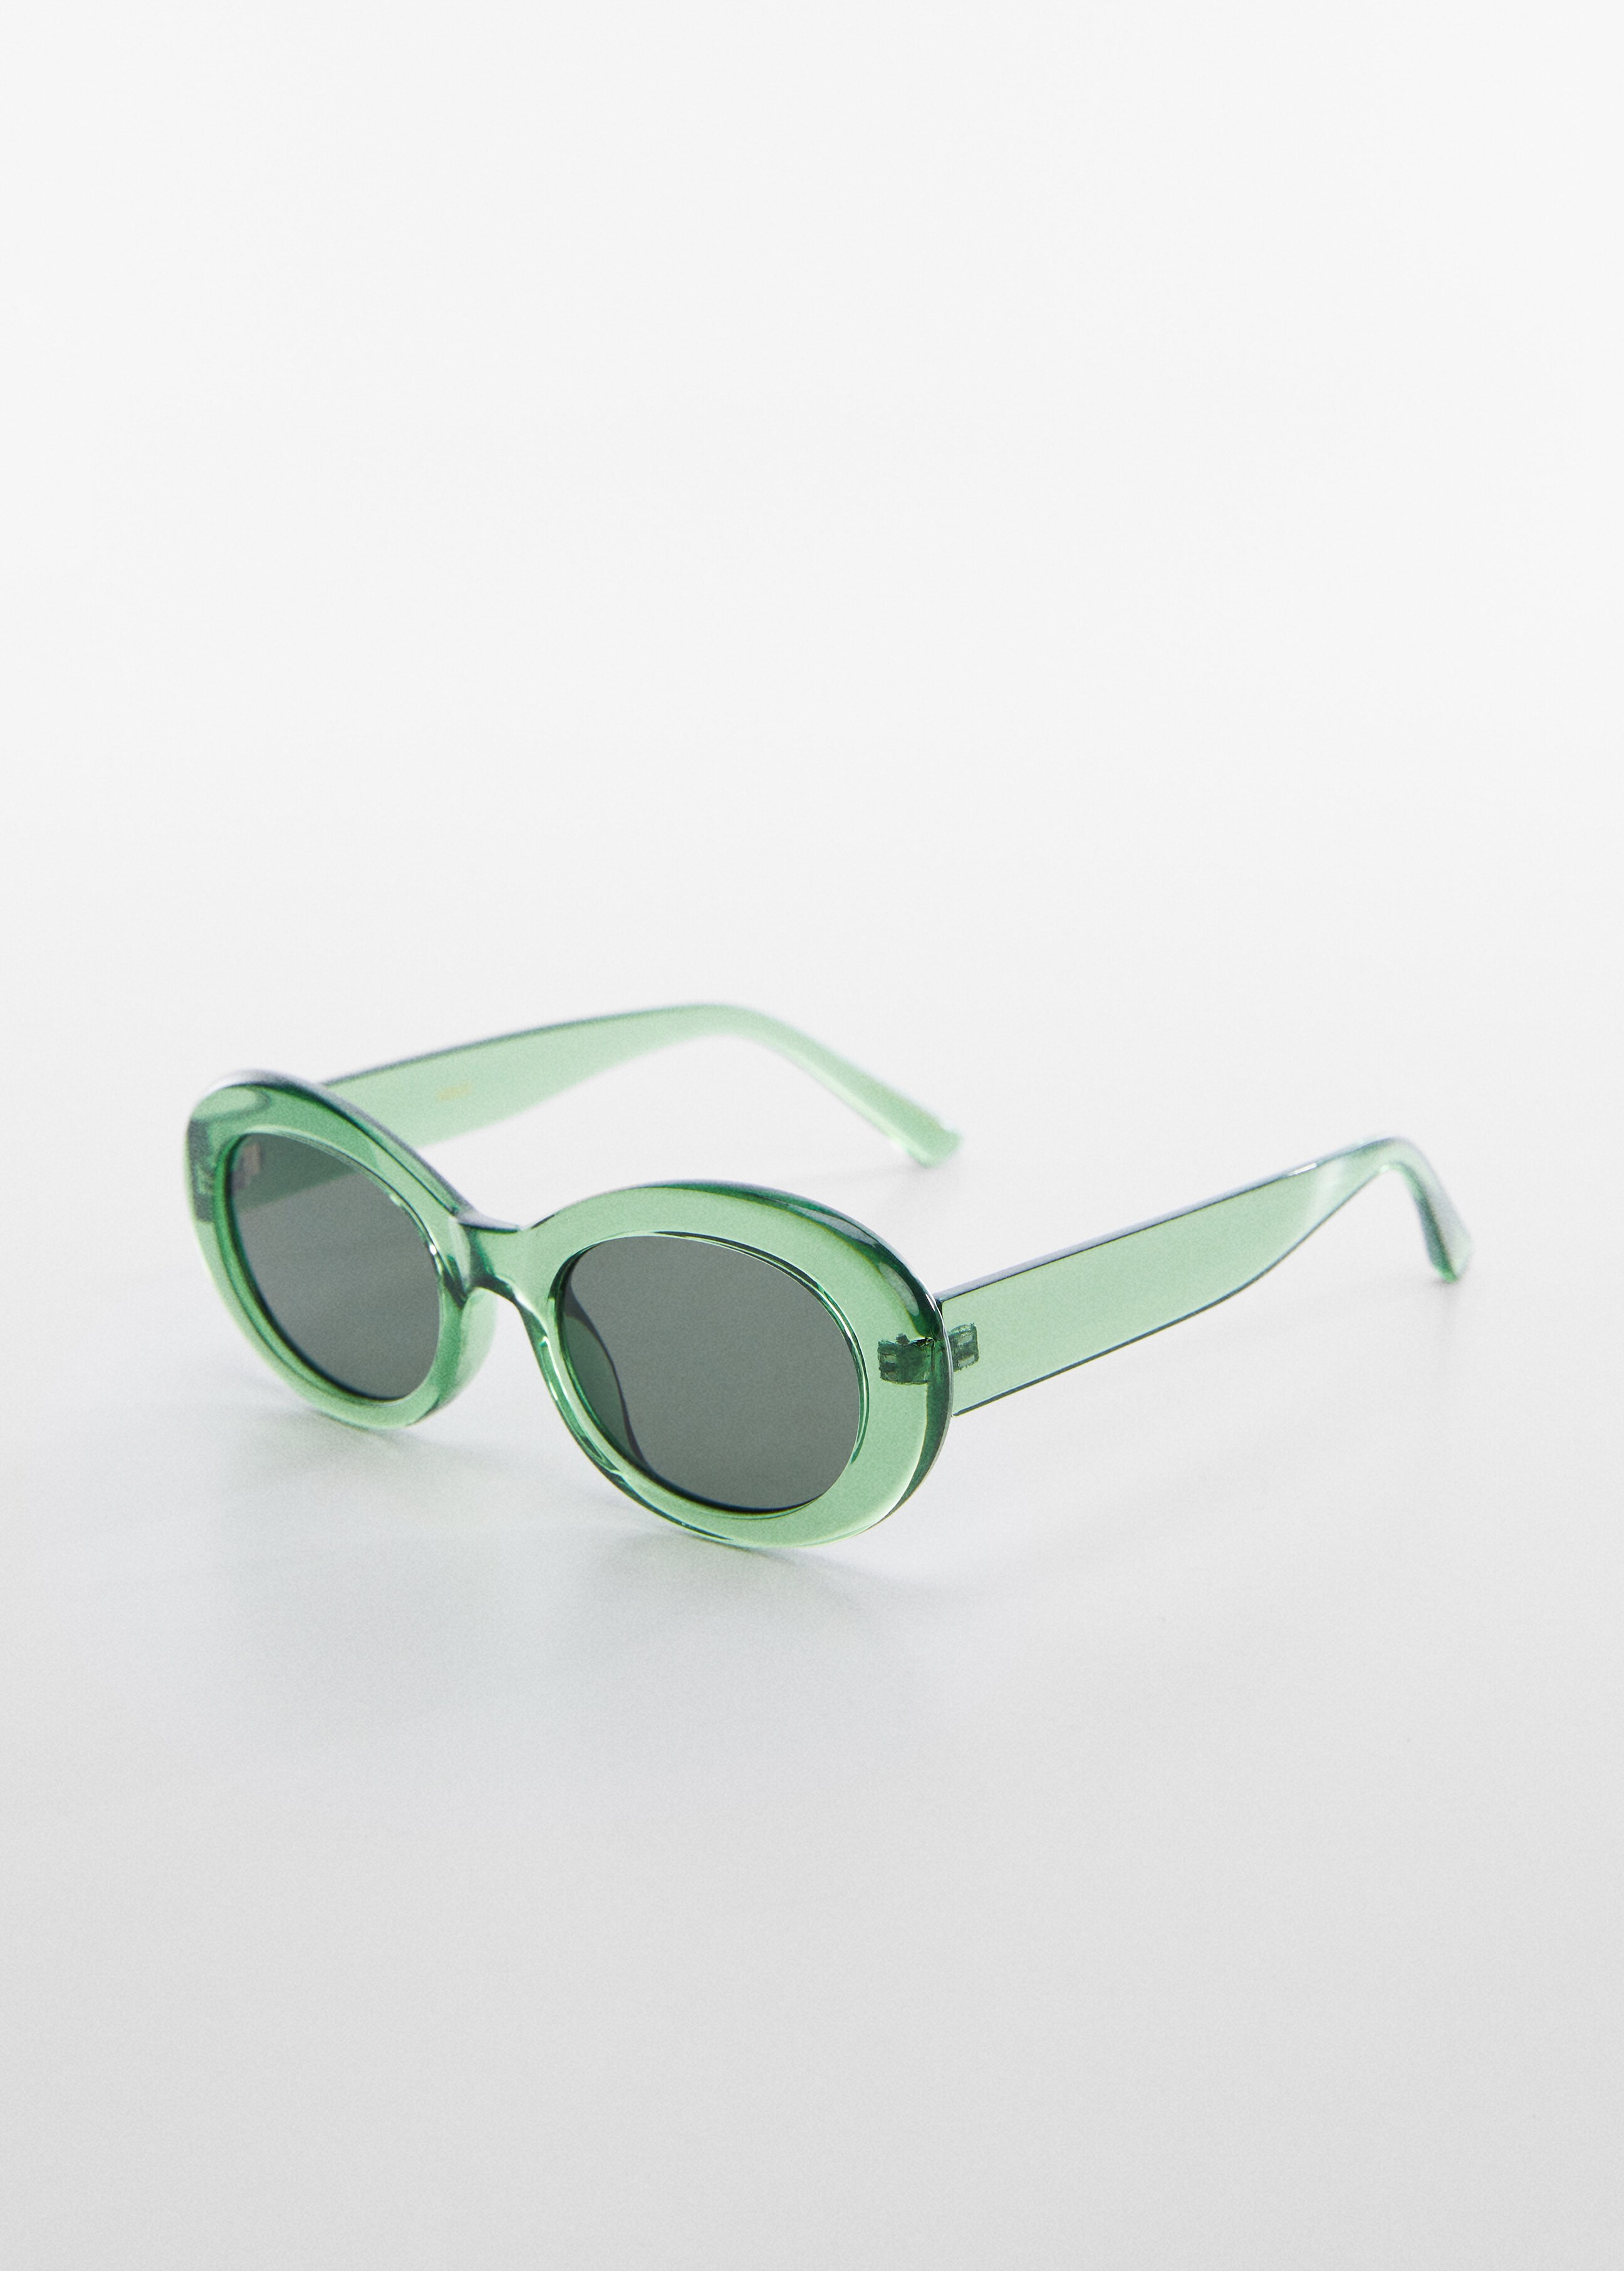 Semi-transparent frame sunglasses - Medium plane